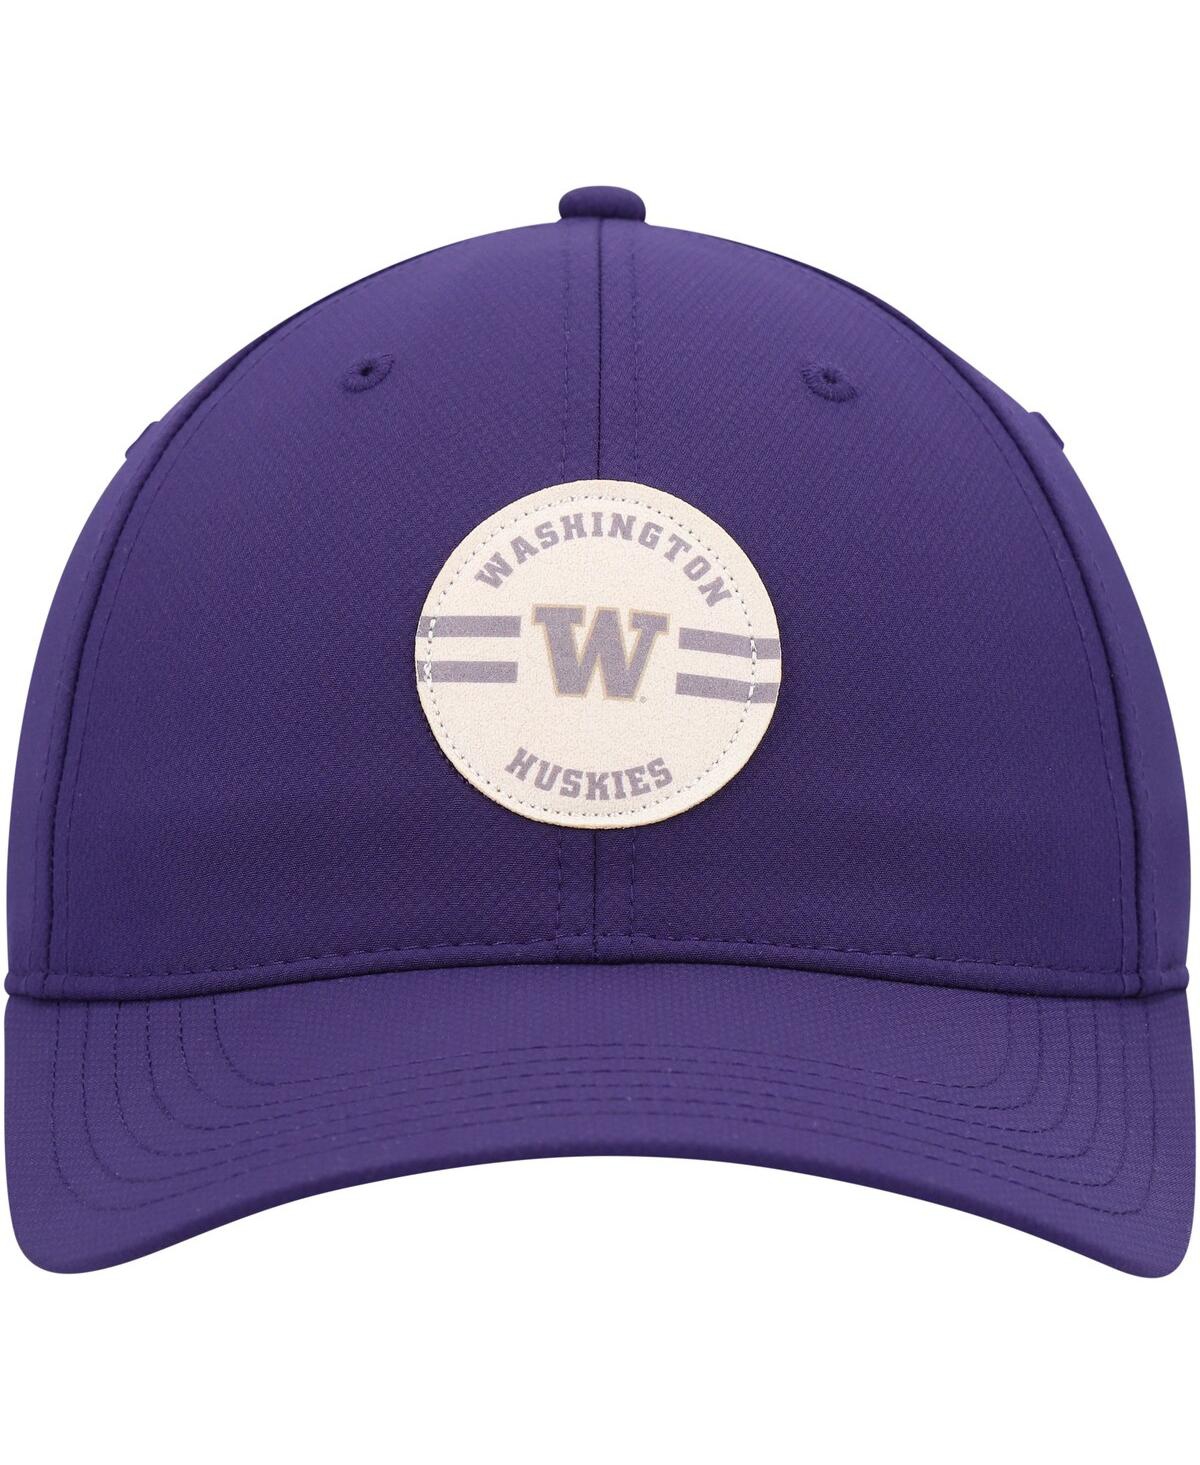 Shop Ahead Men's  Purple Washington Huskies Frio Adjustable Hat